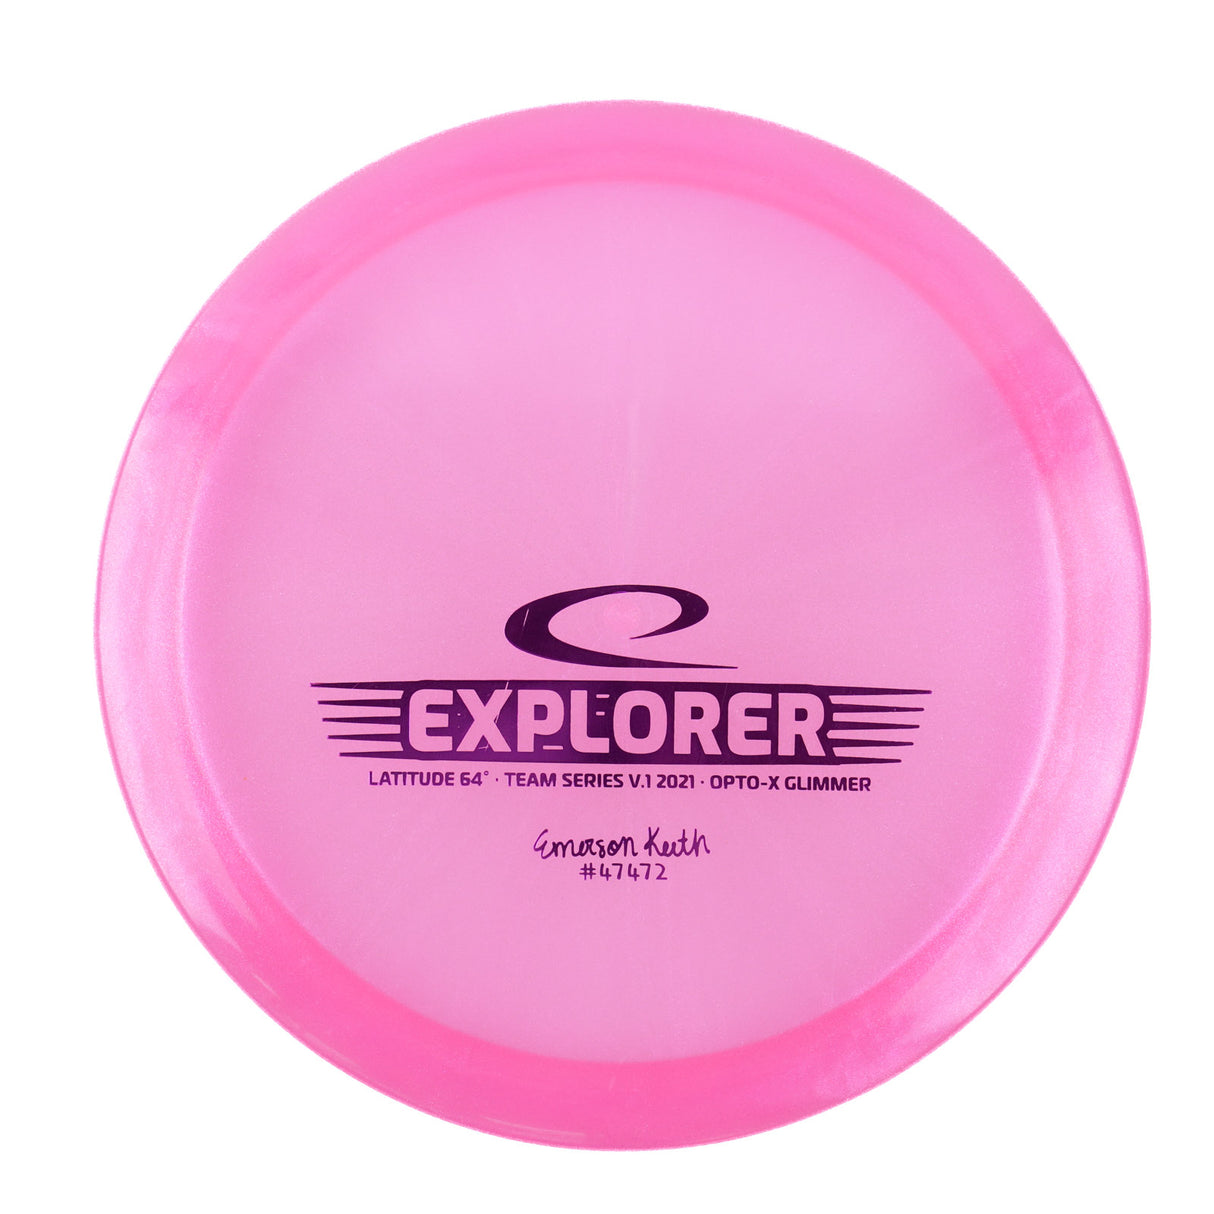 Latitude 64 Explorer - Emerson Keith 2021 Team Series Opto-X Glimmer 174g | Style 0002